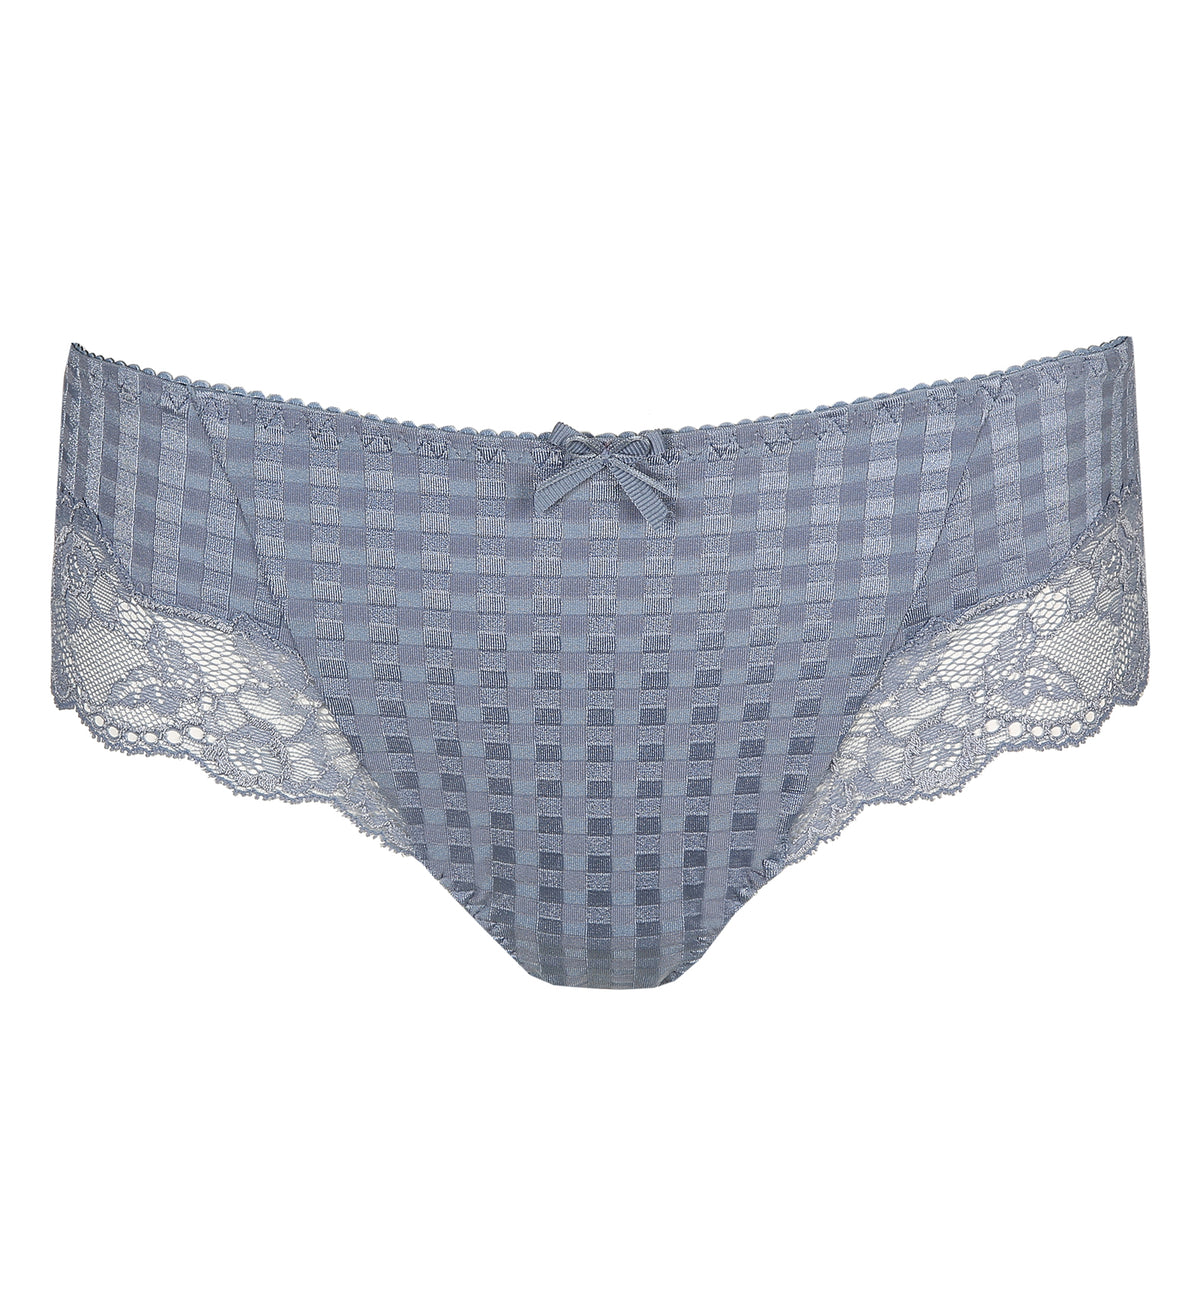 PrimaDonna Madison Matching Hotpants Panty (0562127),Small,Atlantic Blue - Atlantic Blue,Small